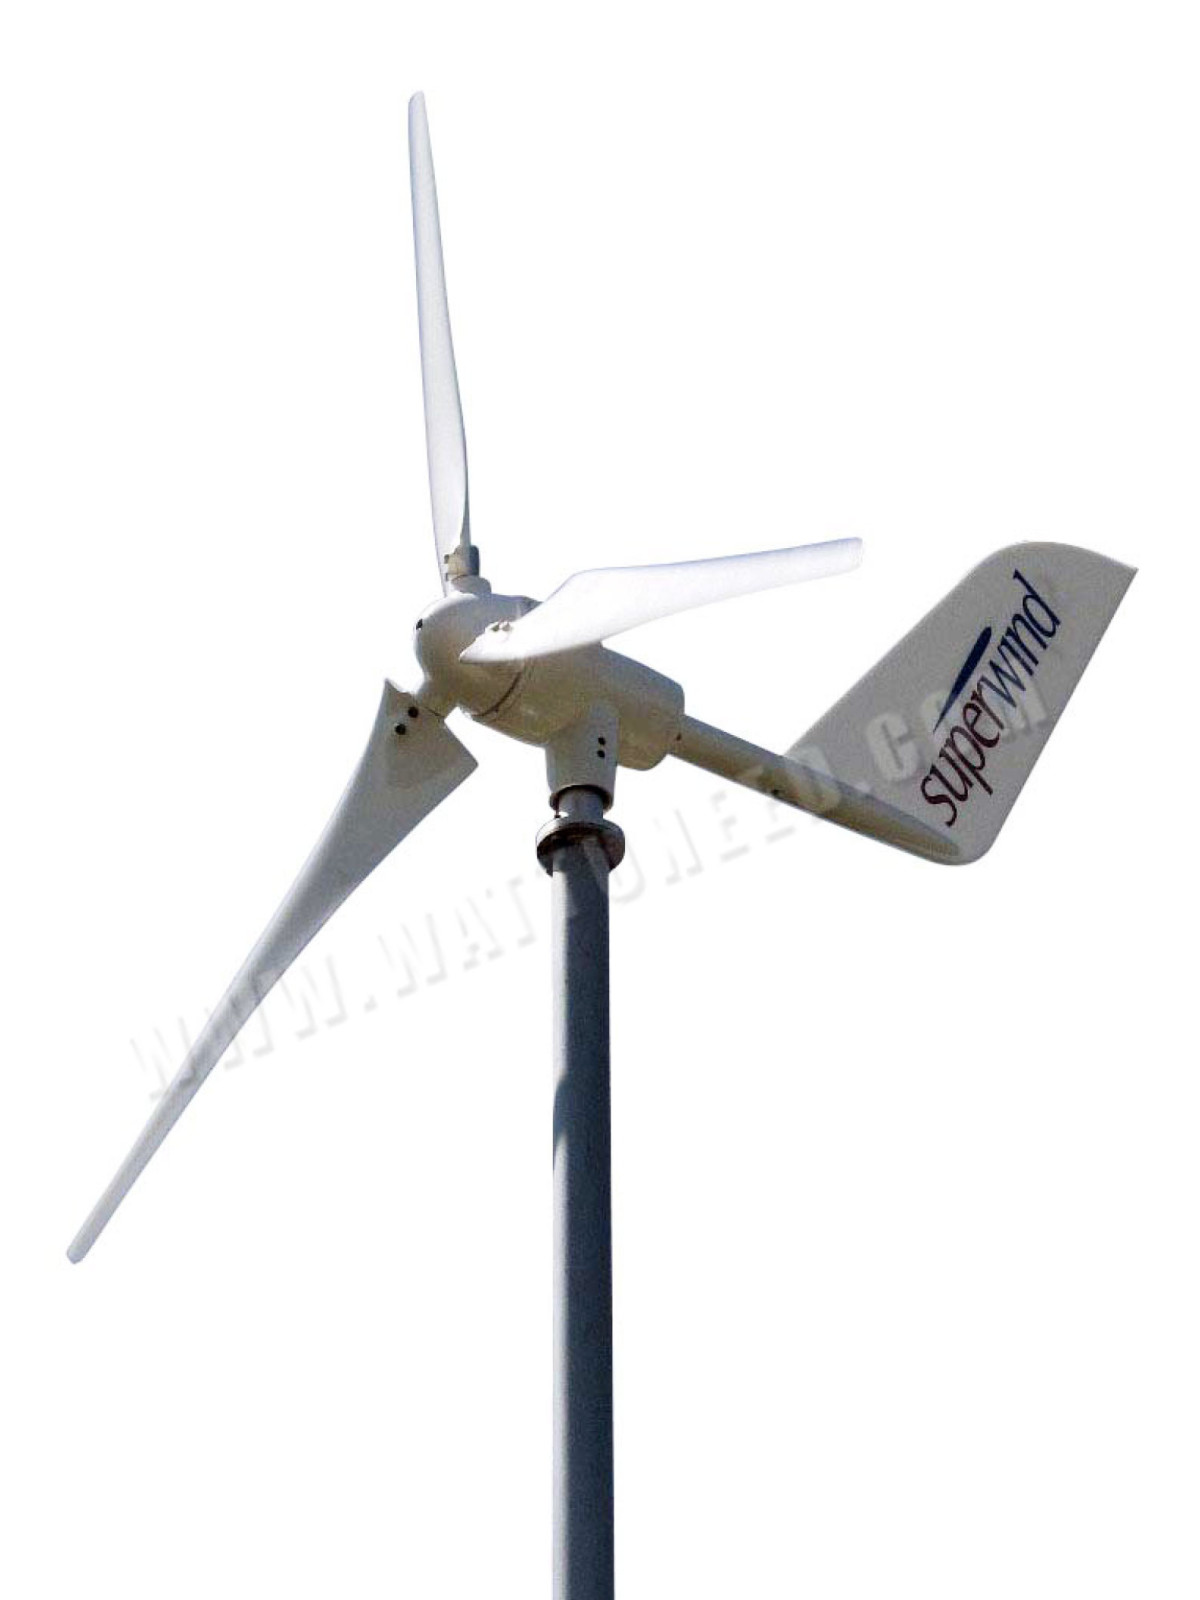 Superwind 1250W fuente 48V viento turbina